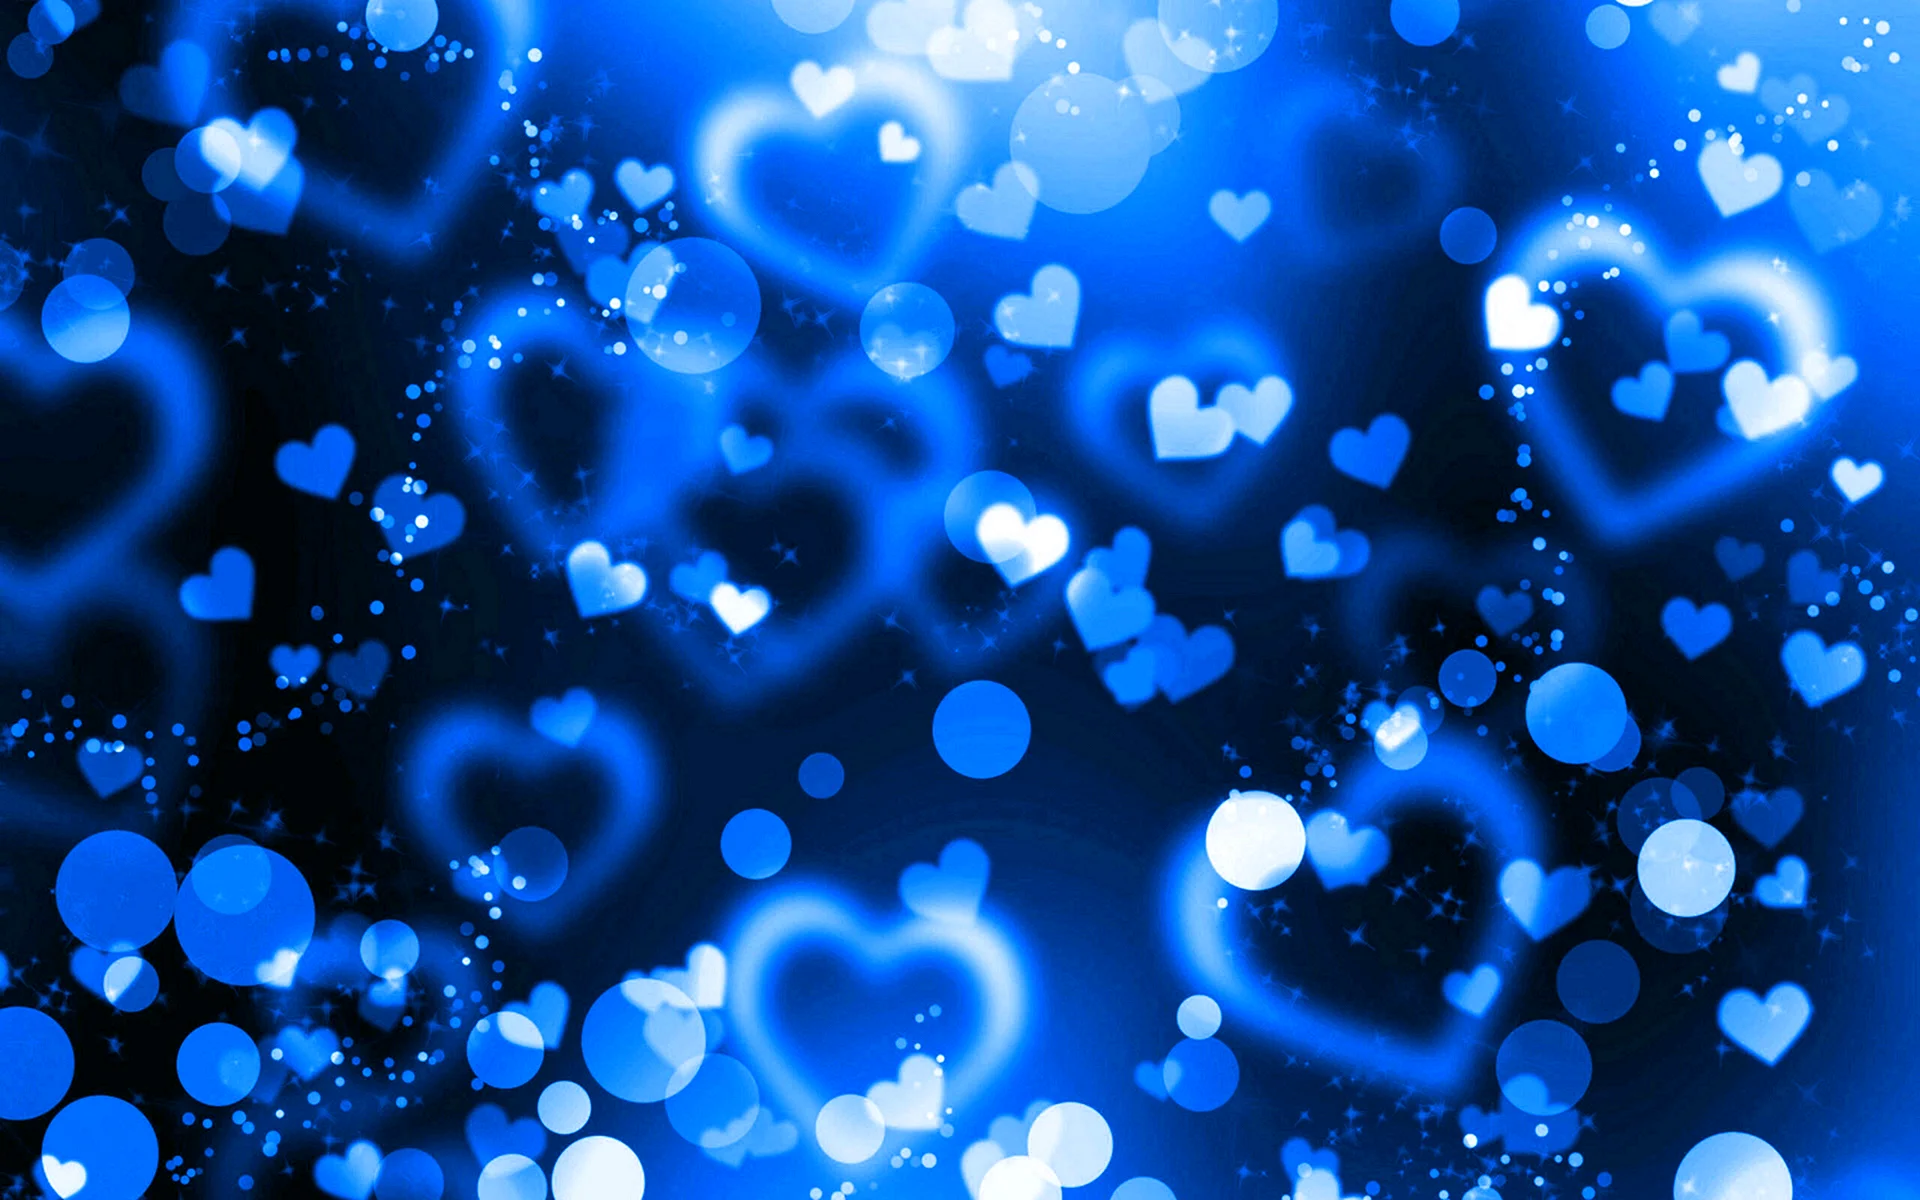 Blue Heart Background Wallpaper